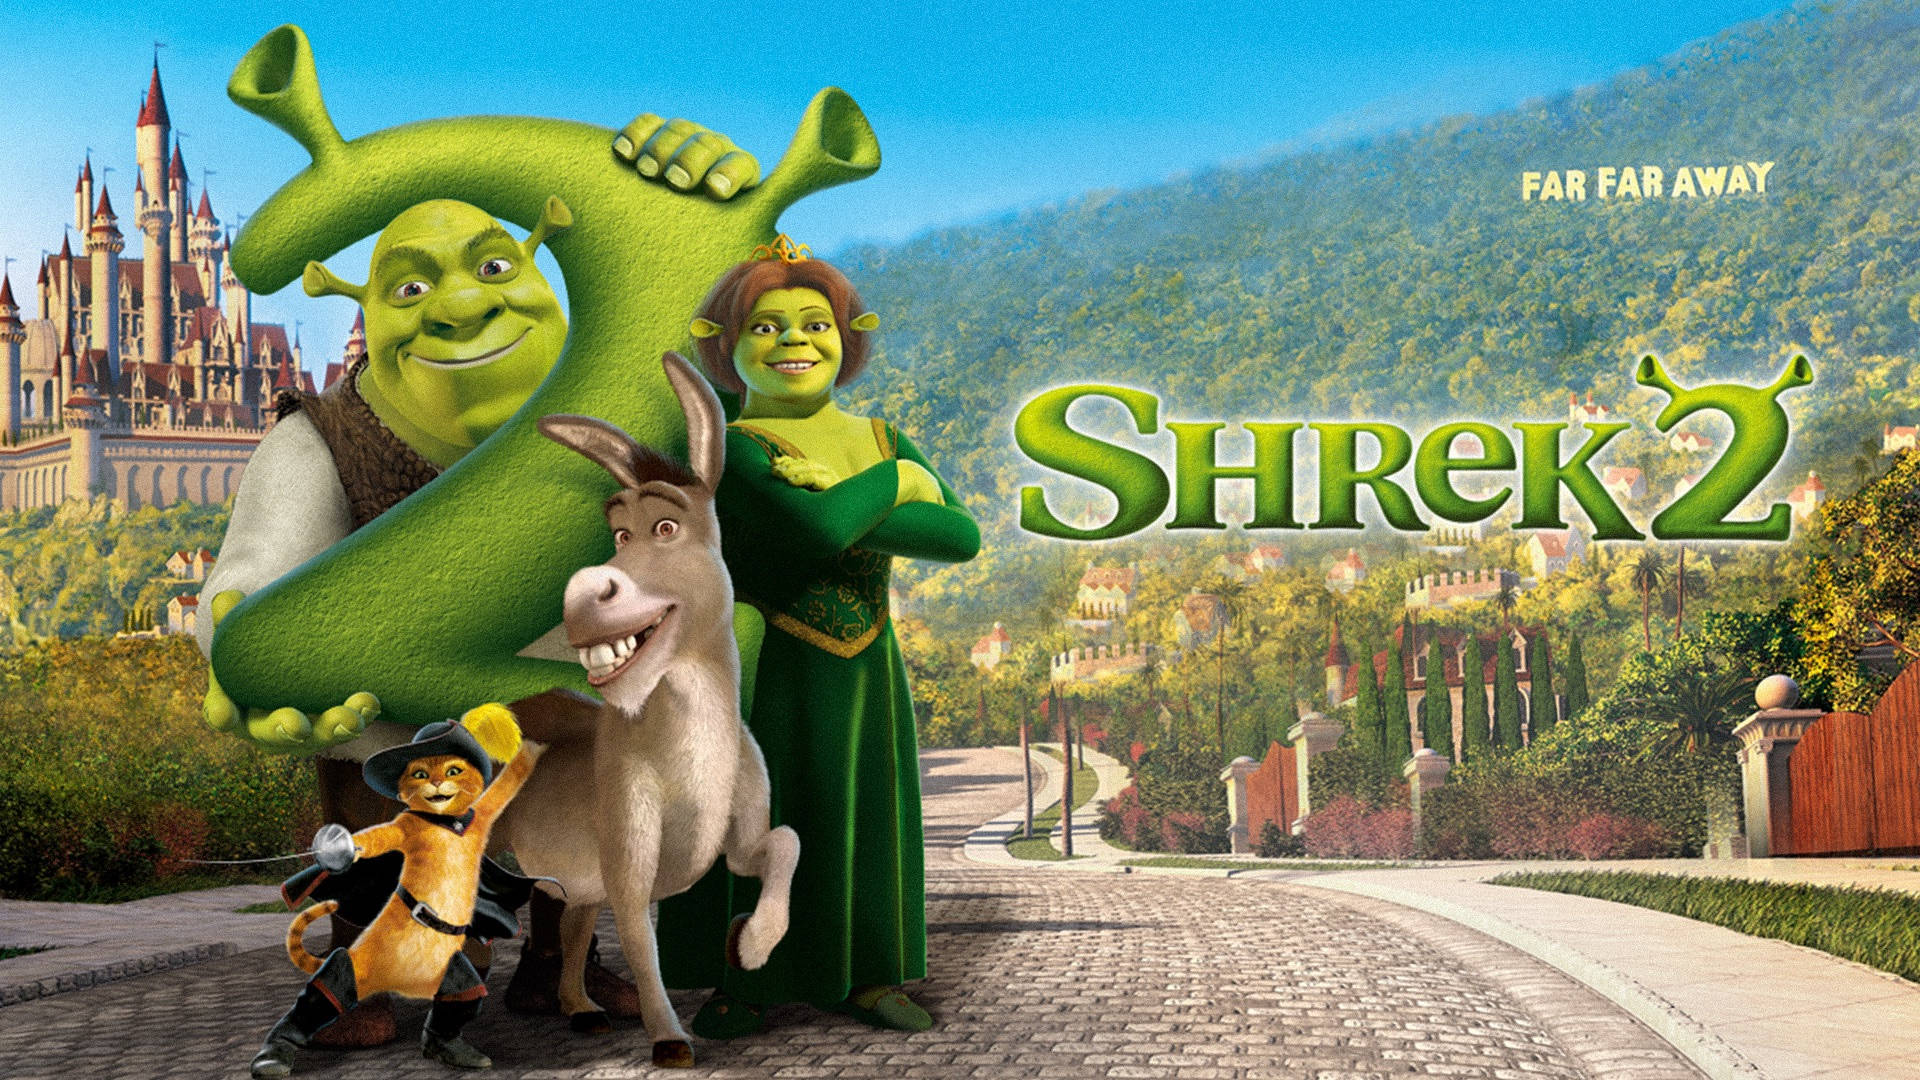 Shrek2 Poster Landschaft Wallpaper